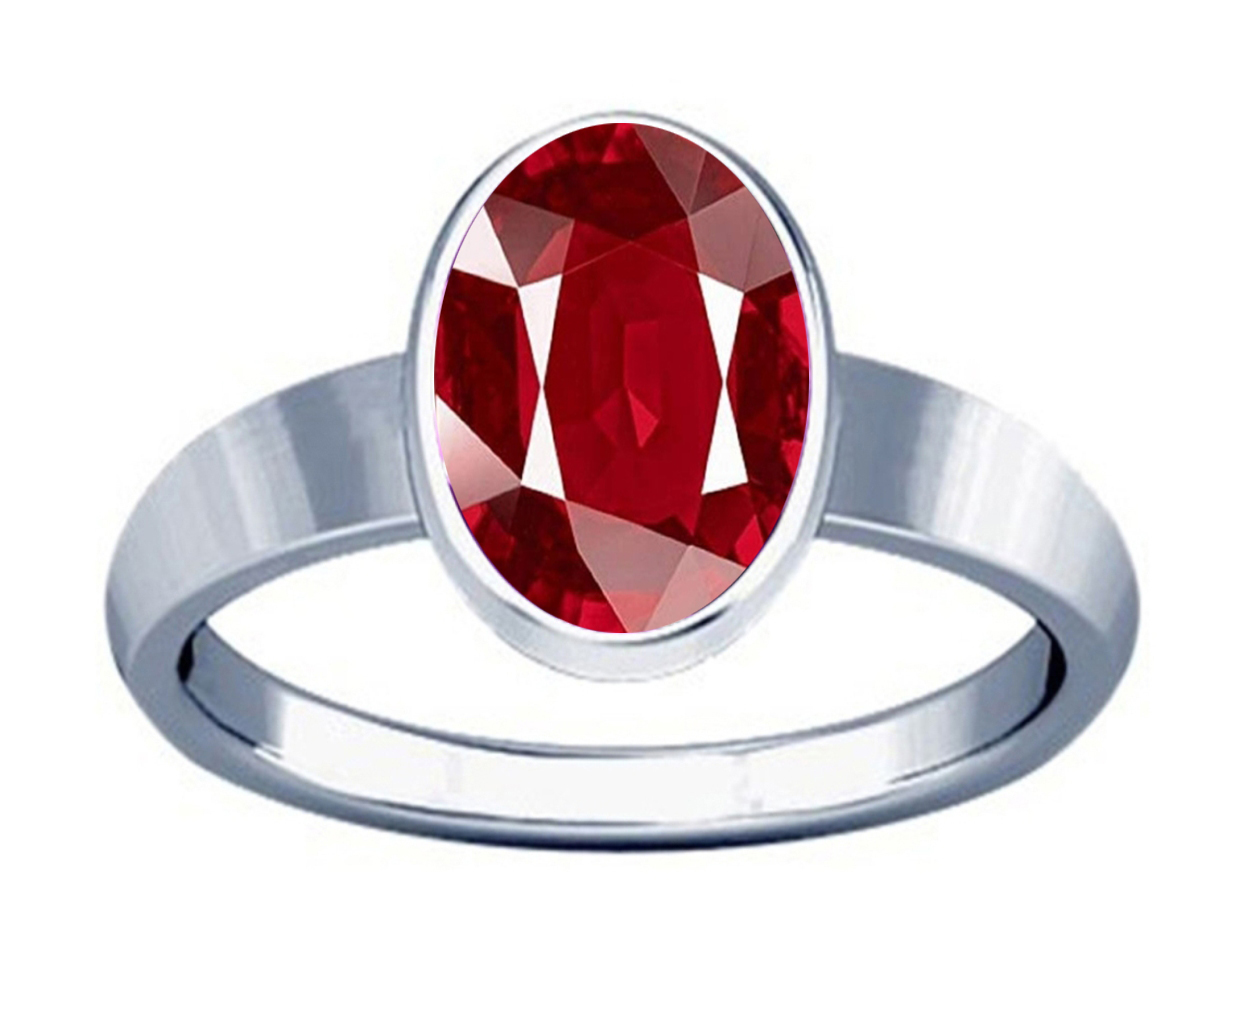 Pin by rubygemstone on Ruby Gemstone jewelry | Gemstones, Ruby gemstone,  Crystals and gemstones